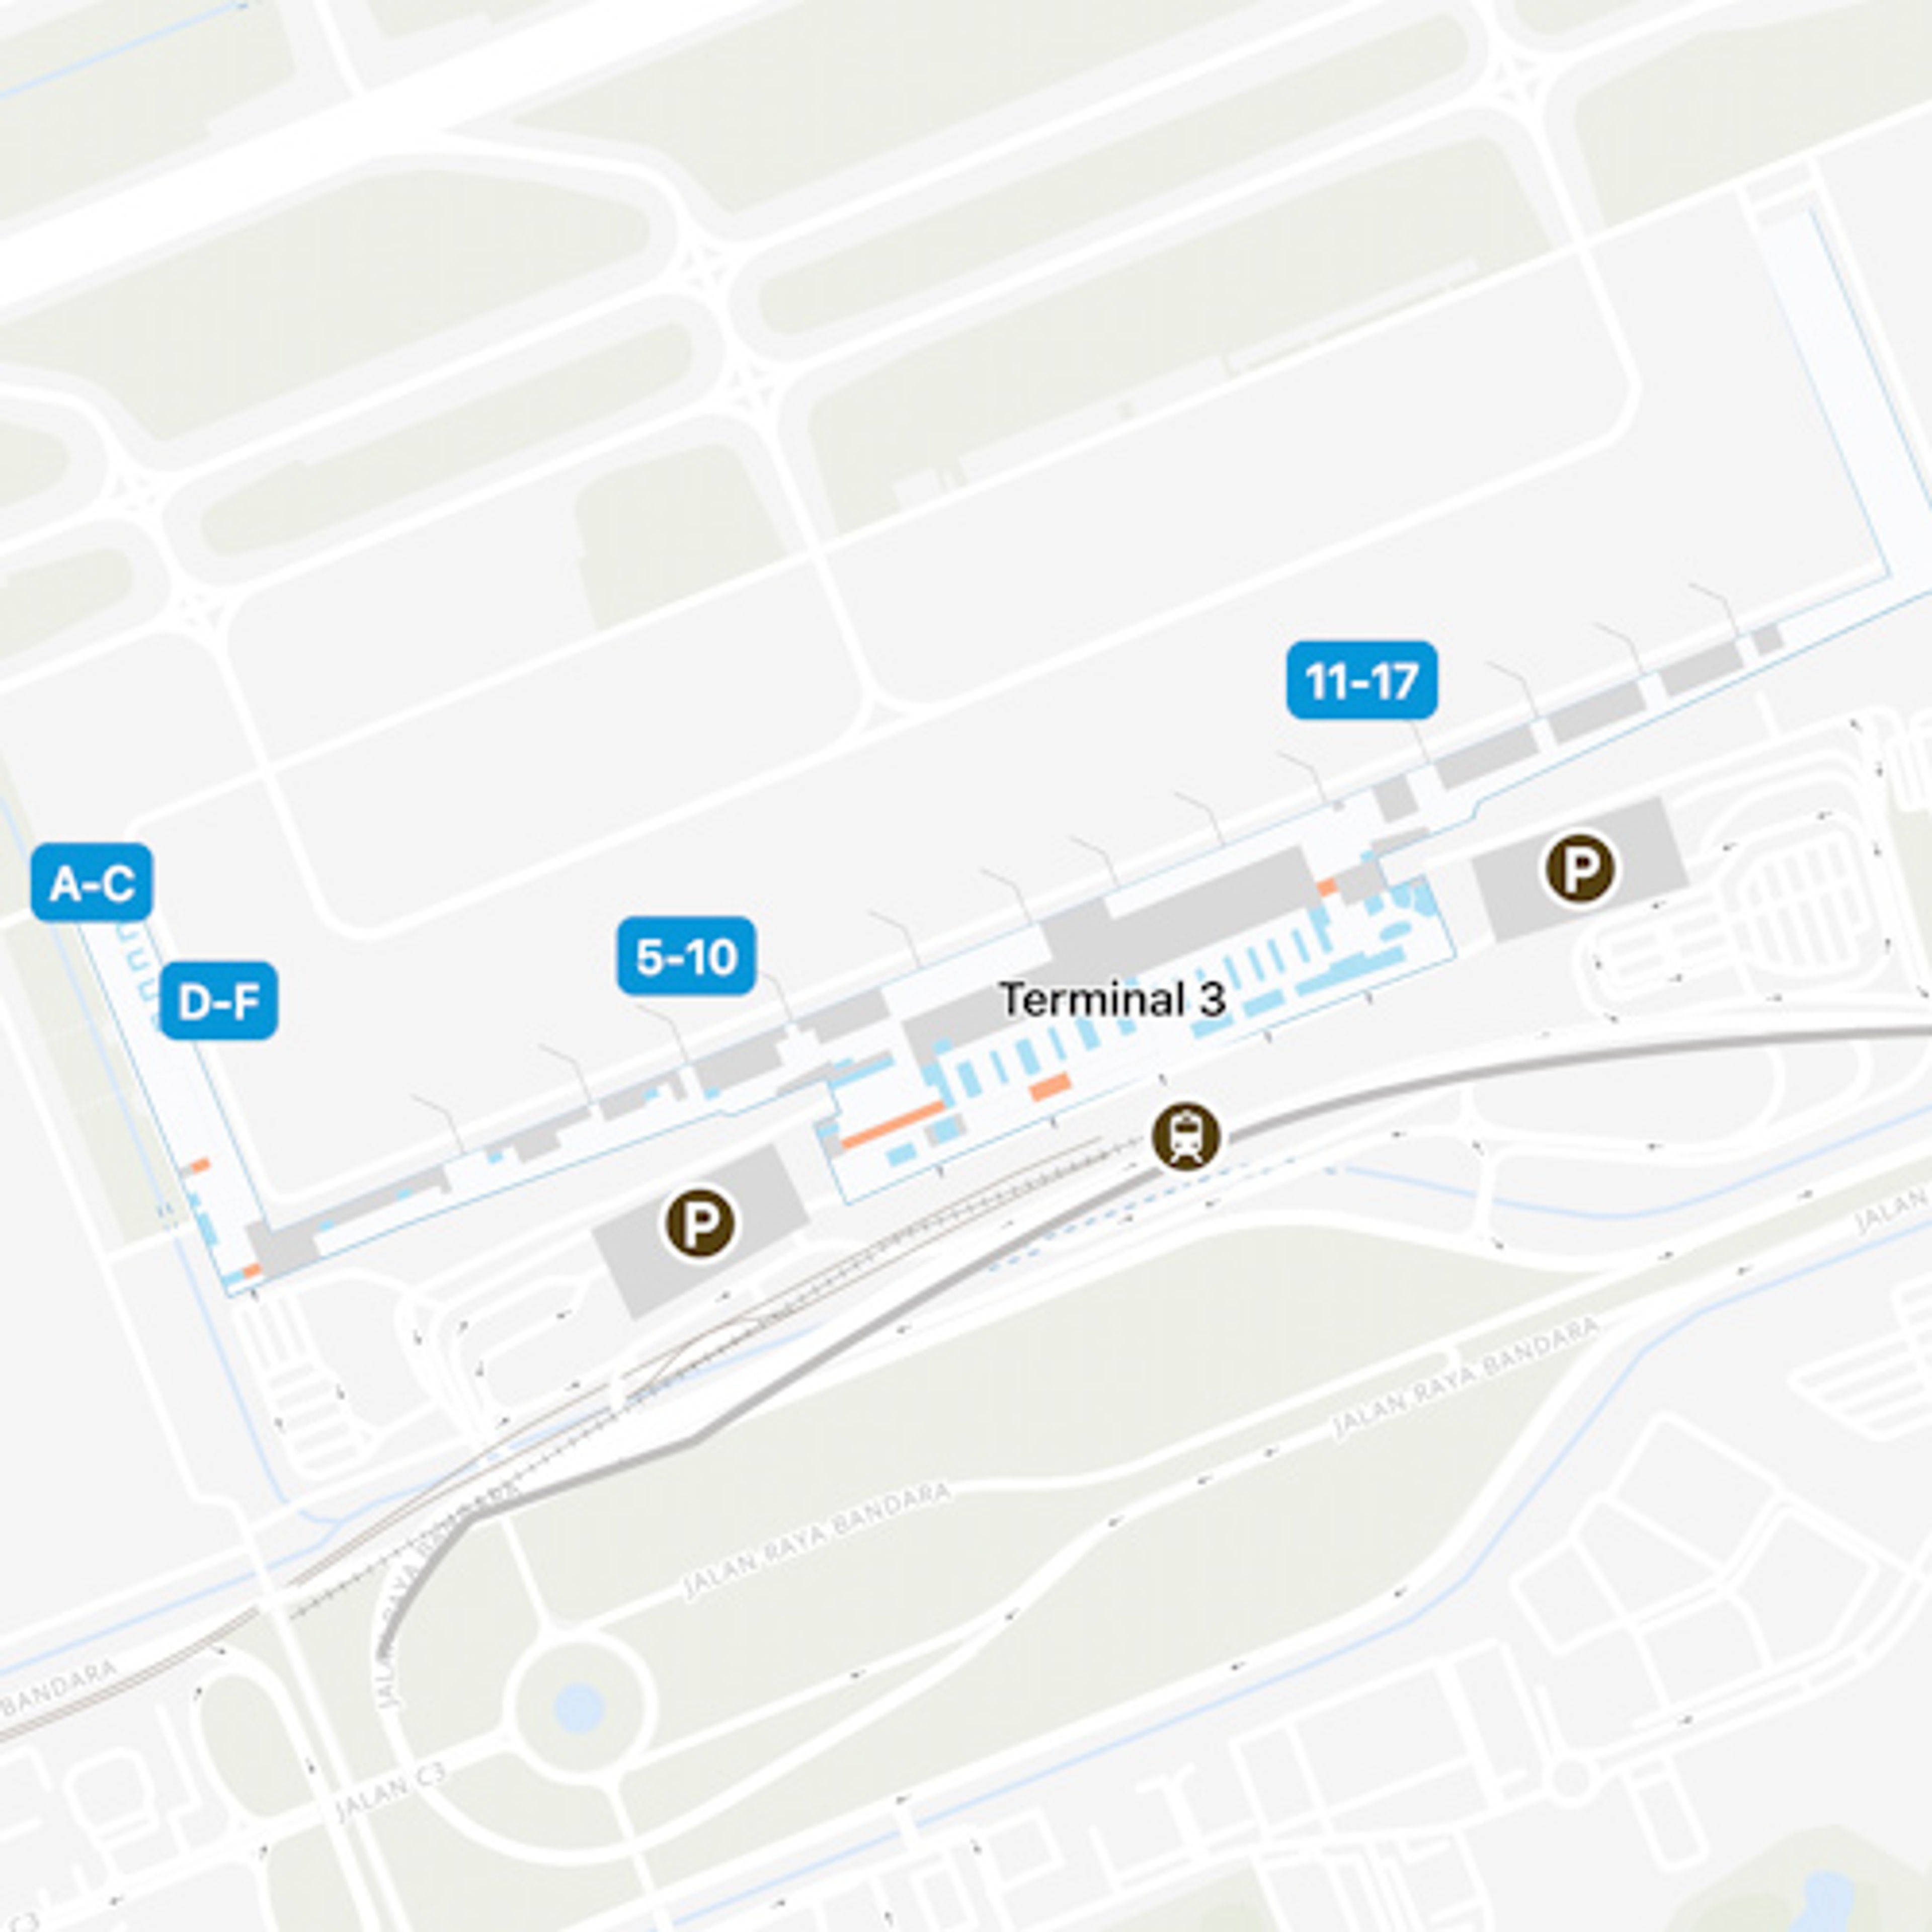 Jakarta Hatta Airport CGK Terminal 3 Map